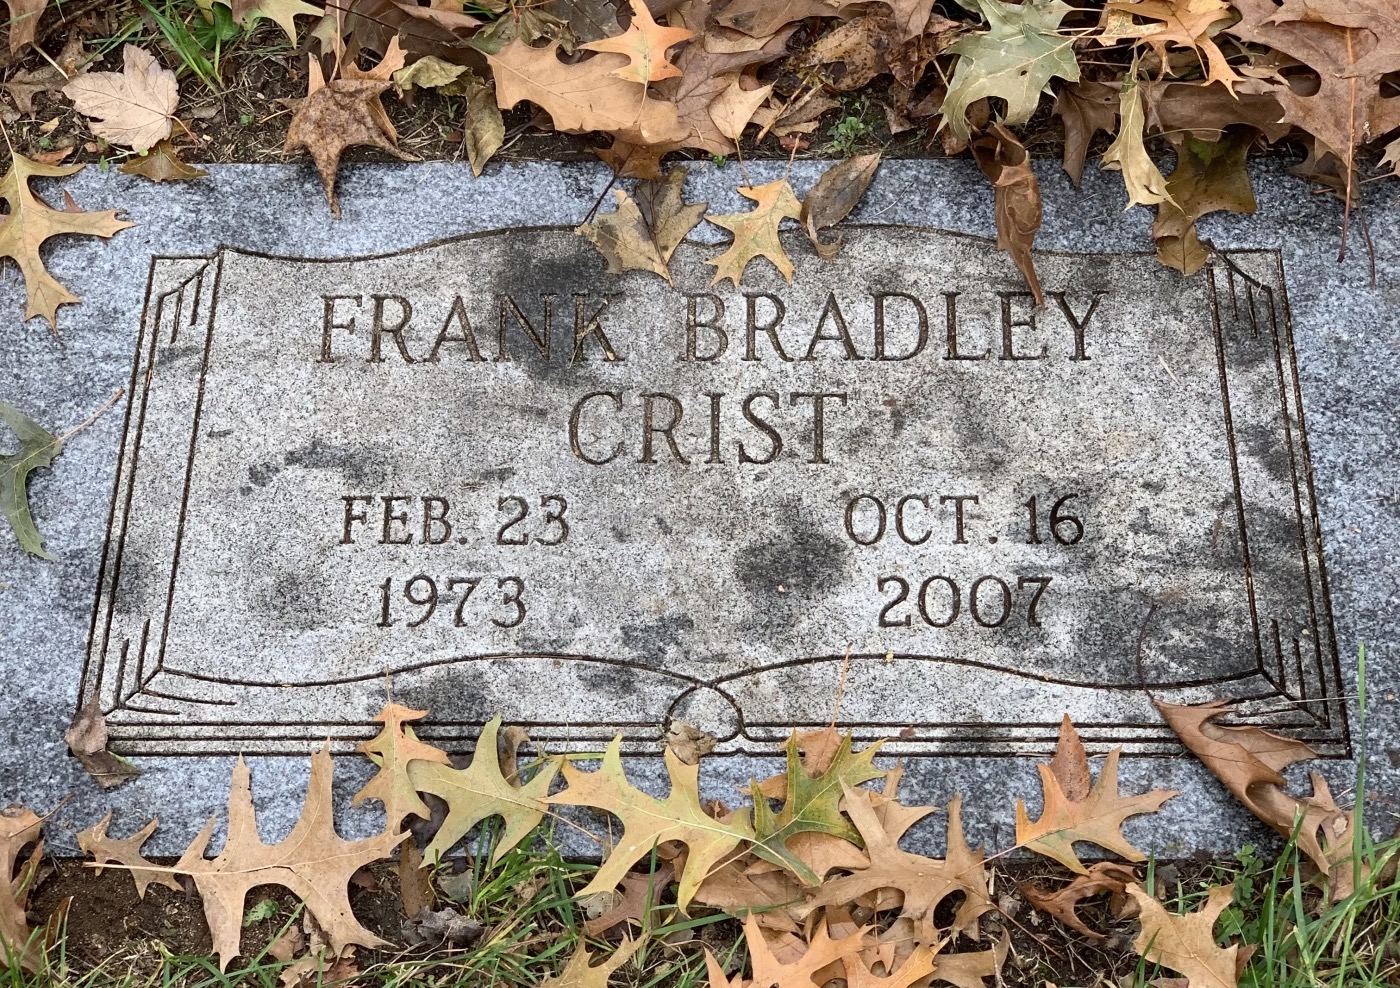 Frank's headstone